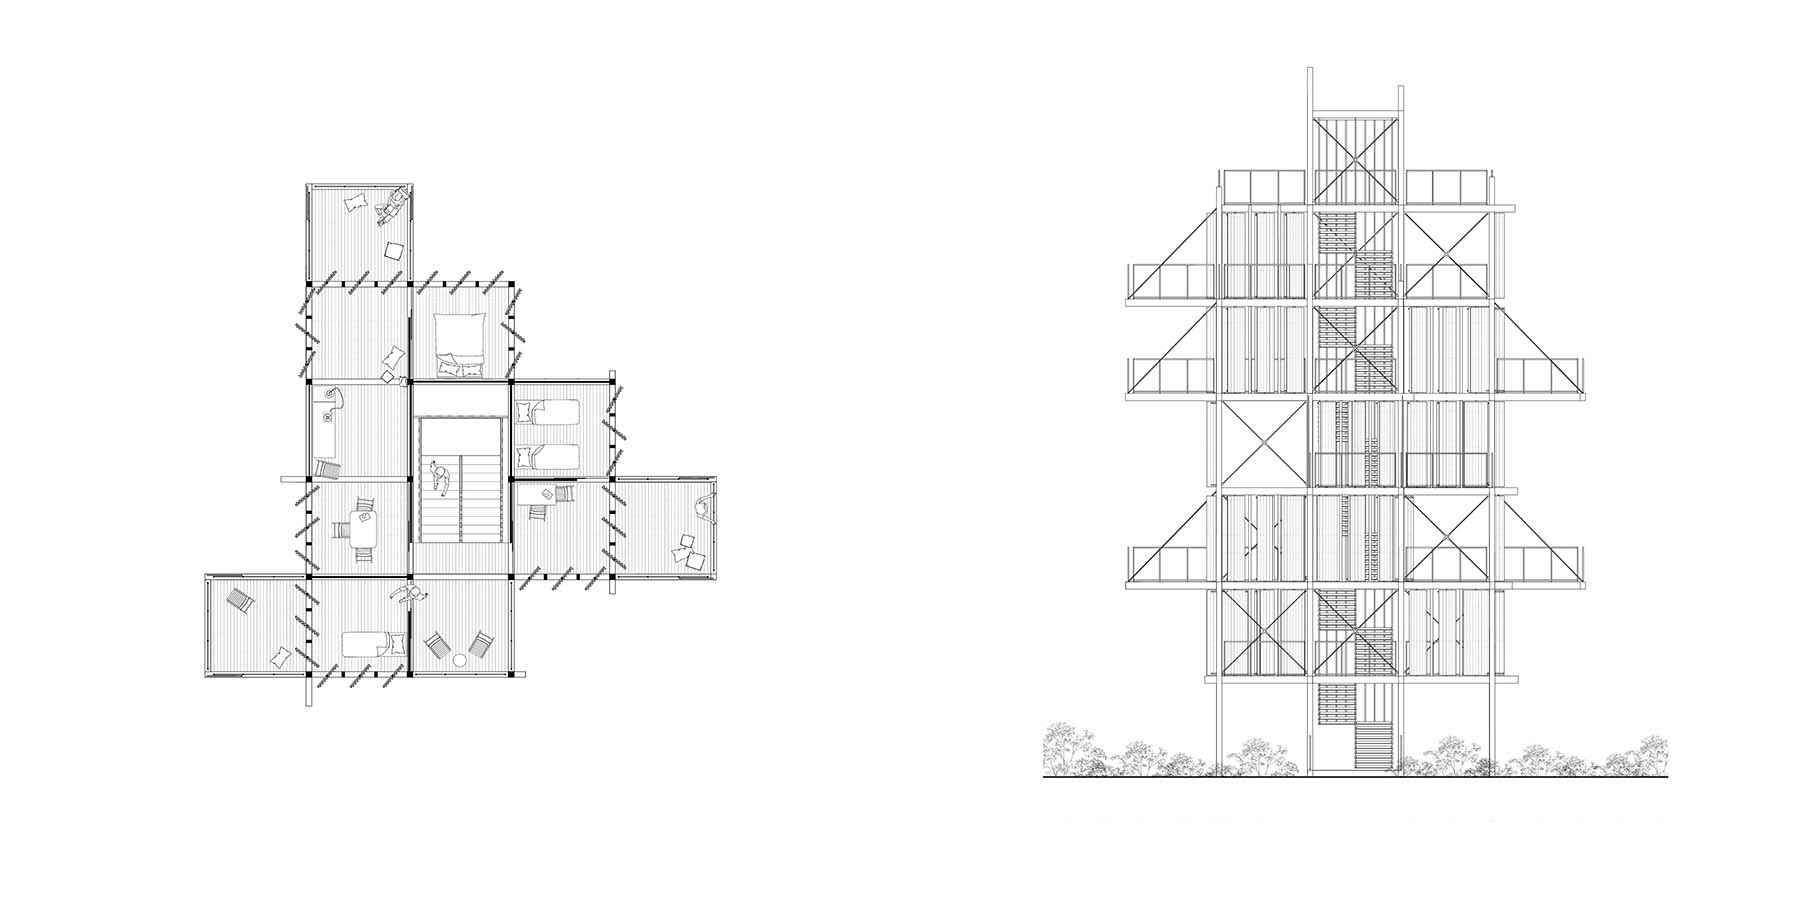 Kennett River Tower Floor Plan & South Elevation Drawings